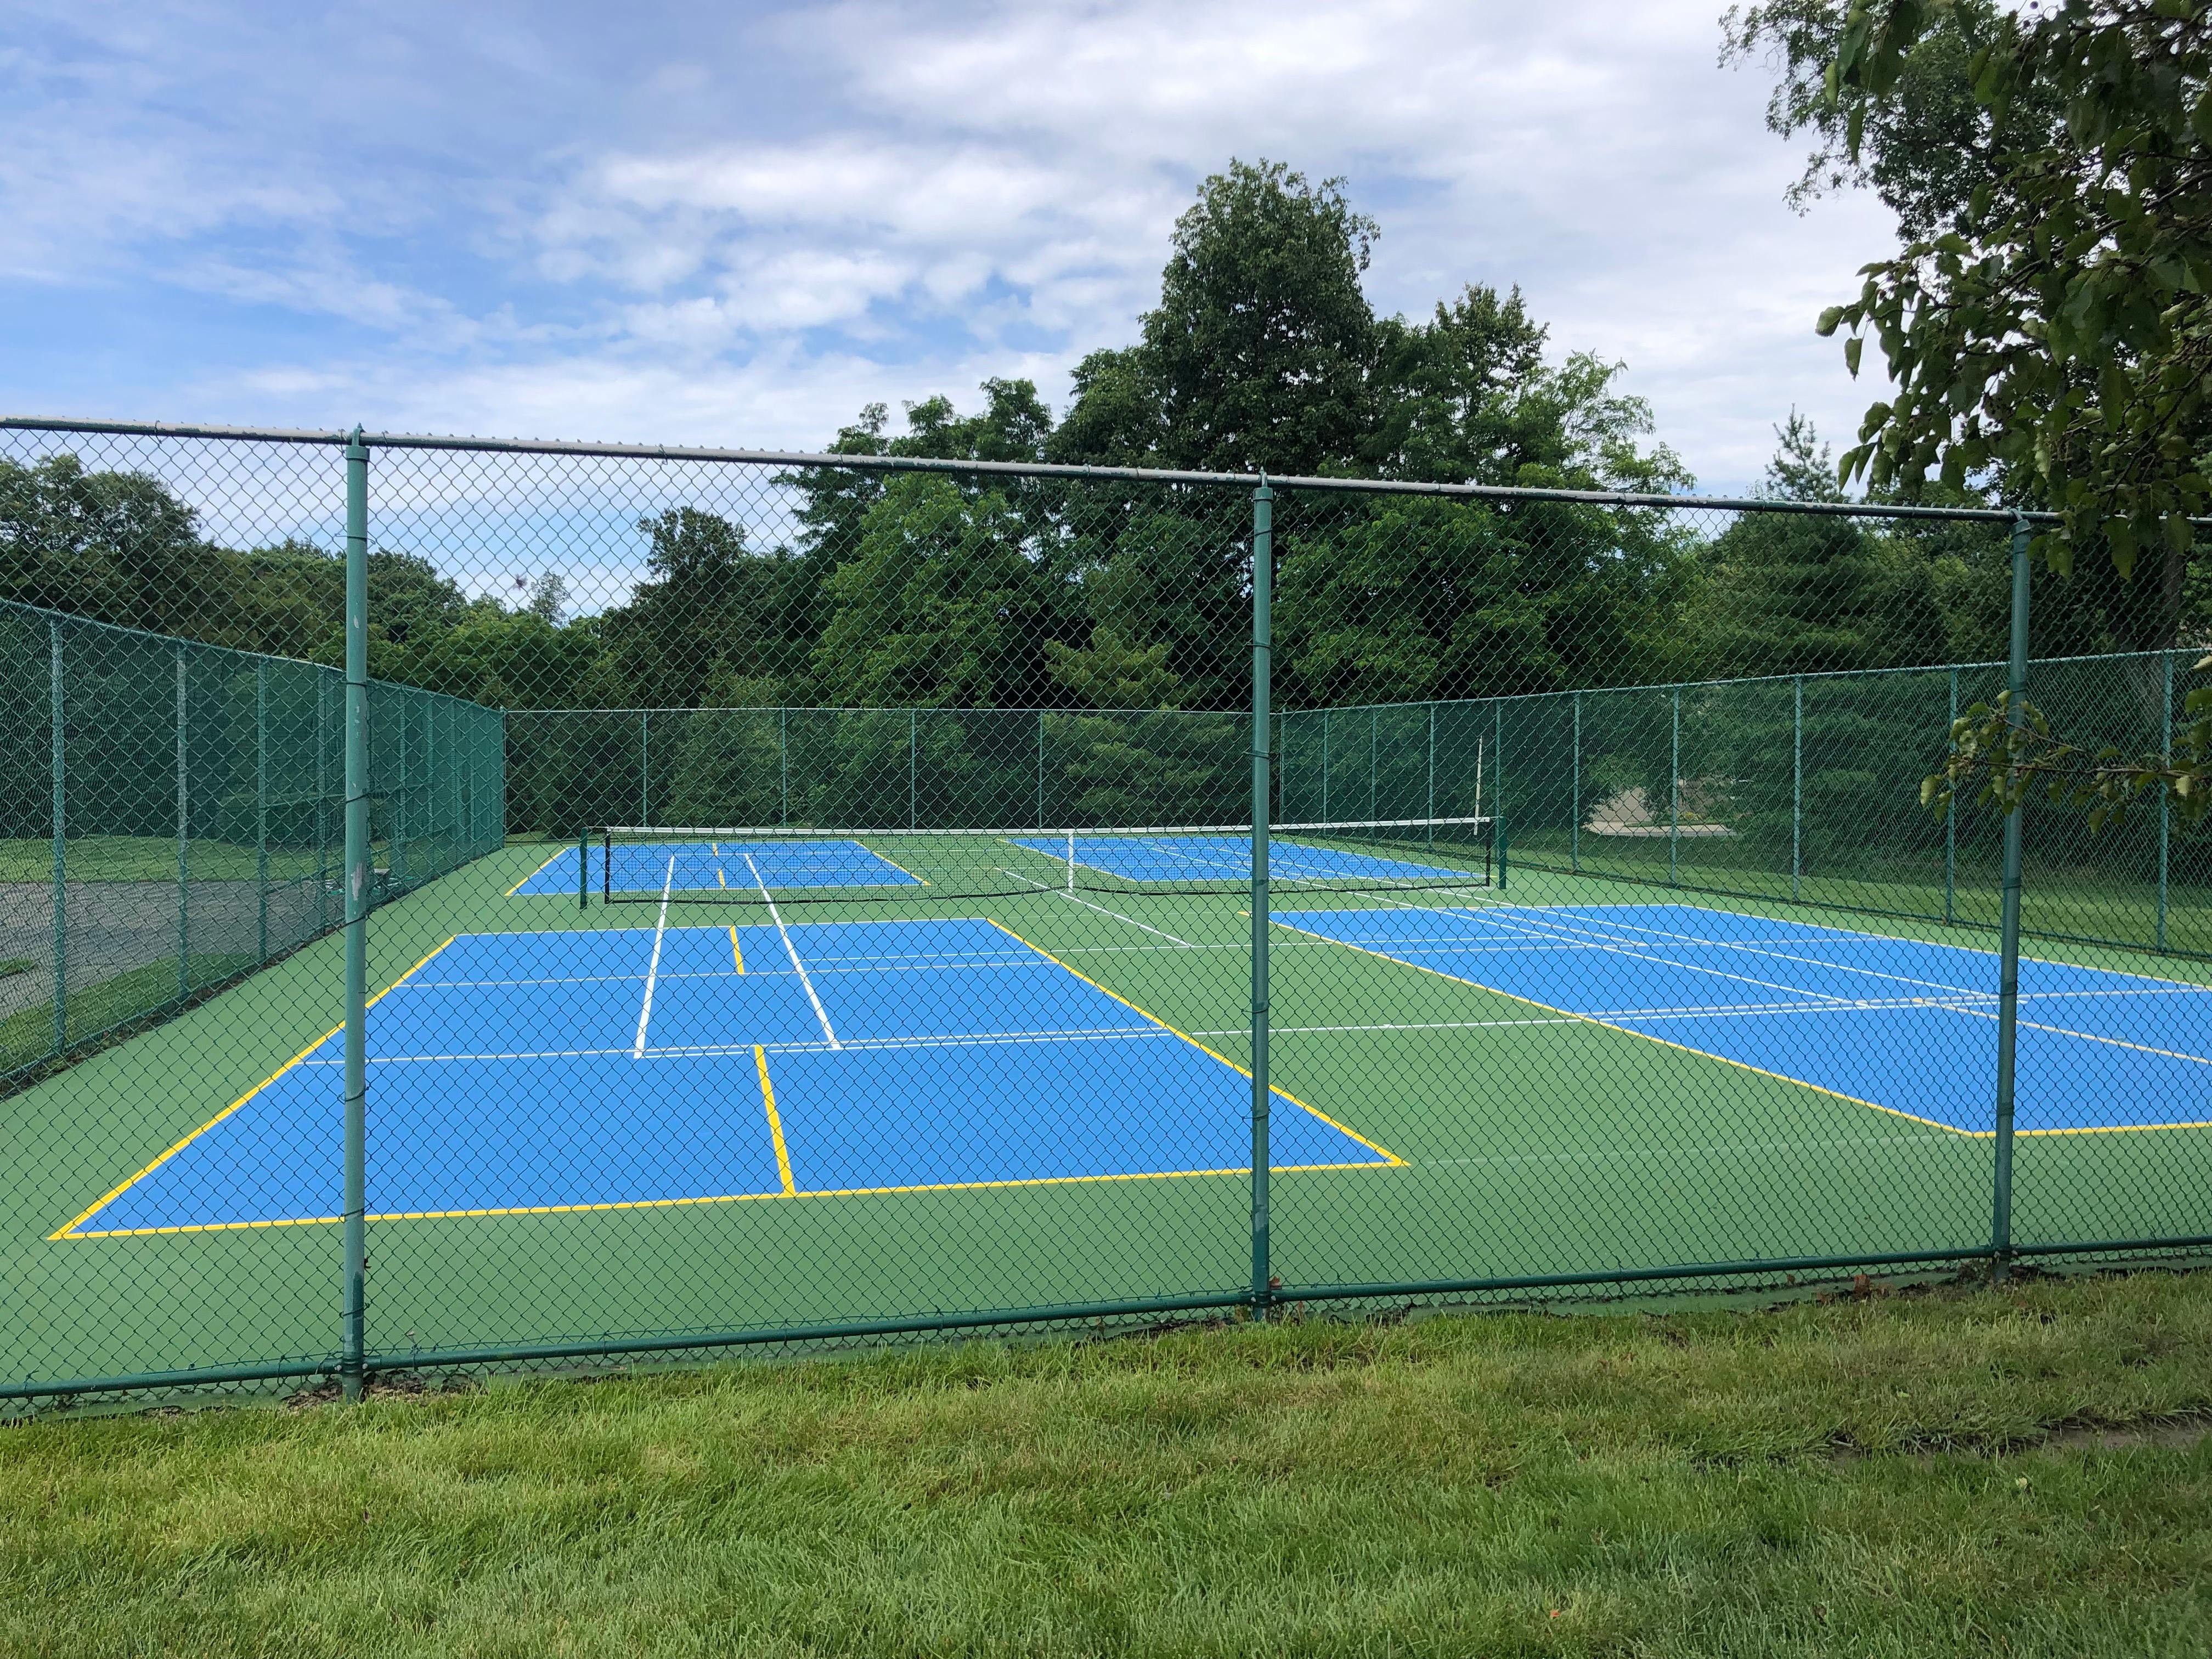 Bridgehaven Pickleball Tennis Facility - We still have time to get your new court in, remodel your c Schubert Tennis LLC Cincinnati (513)310-5890